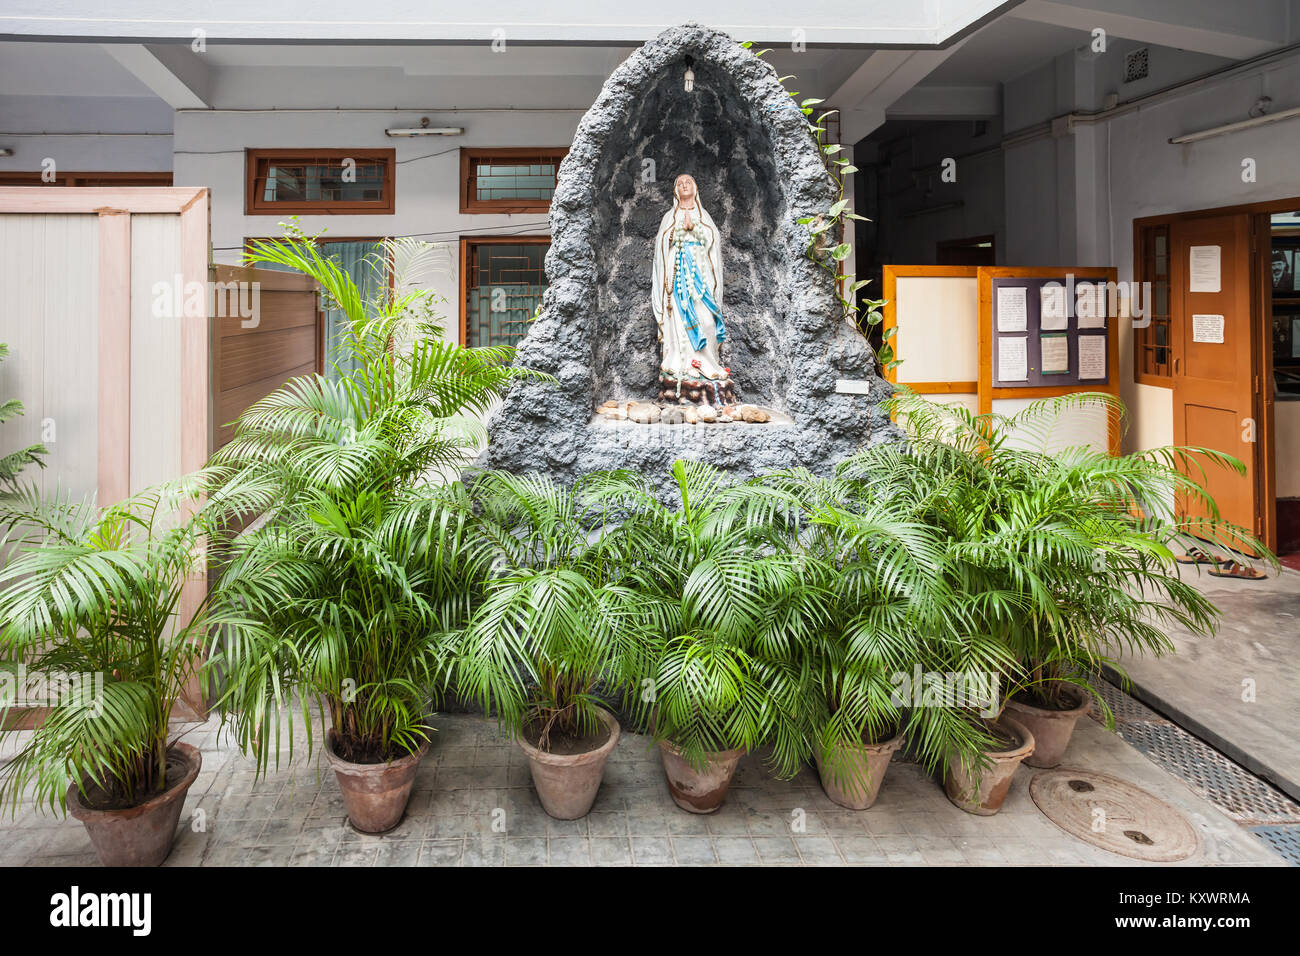 KOLKATA, INDIEN - November 24, 2015: Missionare der Charitys Mutter Teresa Haus (Zentrale) Innenraum in Kalkutta. Stockfoto